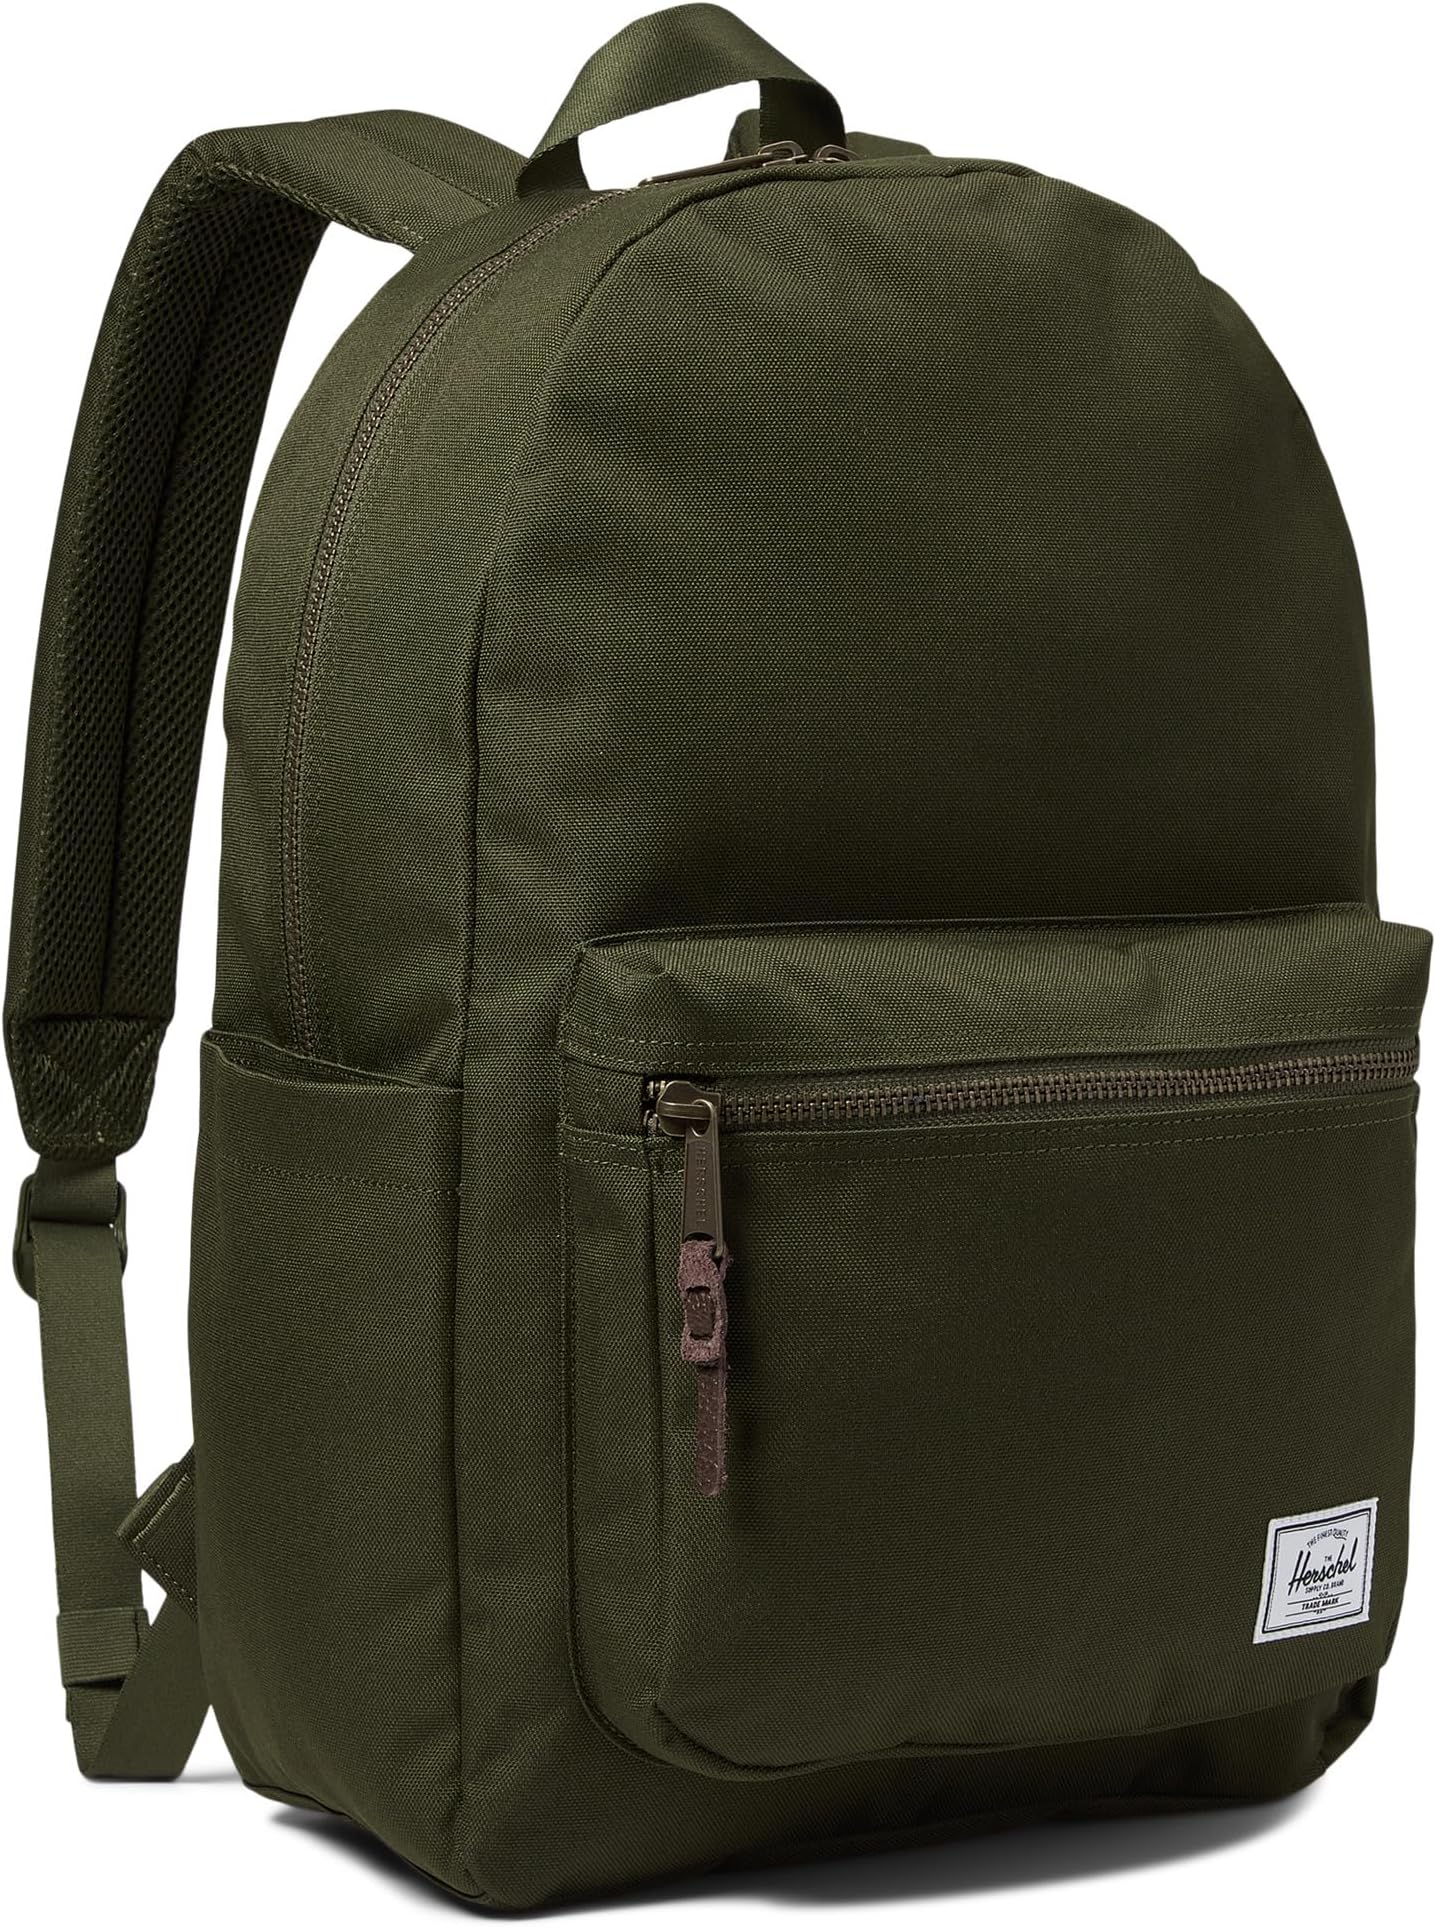 рюкзак heritage backpack herschel supply co цвет ivy green chicory coffee Рюкзак Settlement Backpack Herschel Supply Co., цвет Ivy Green